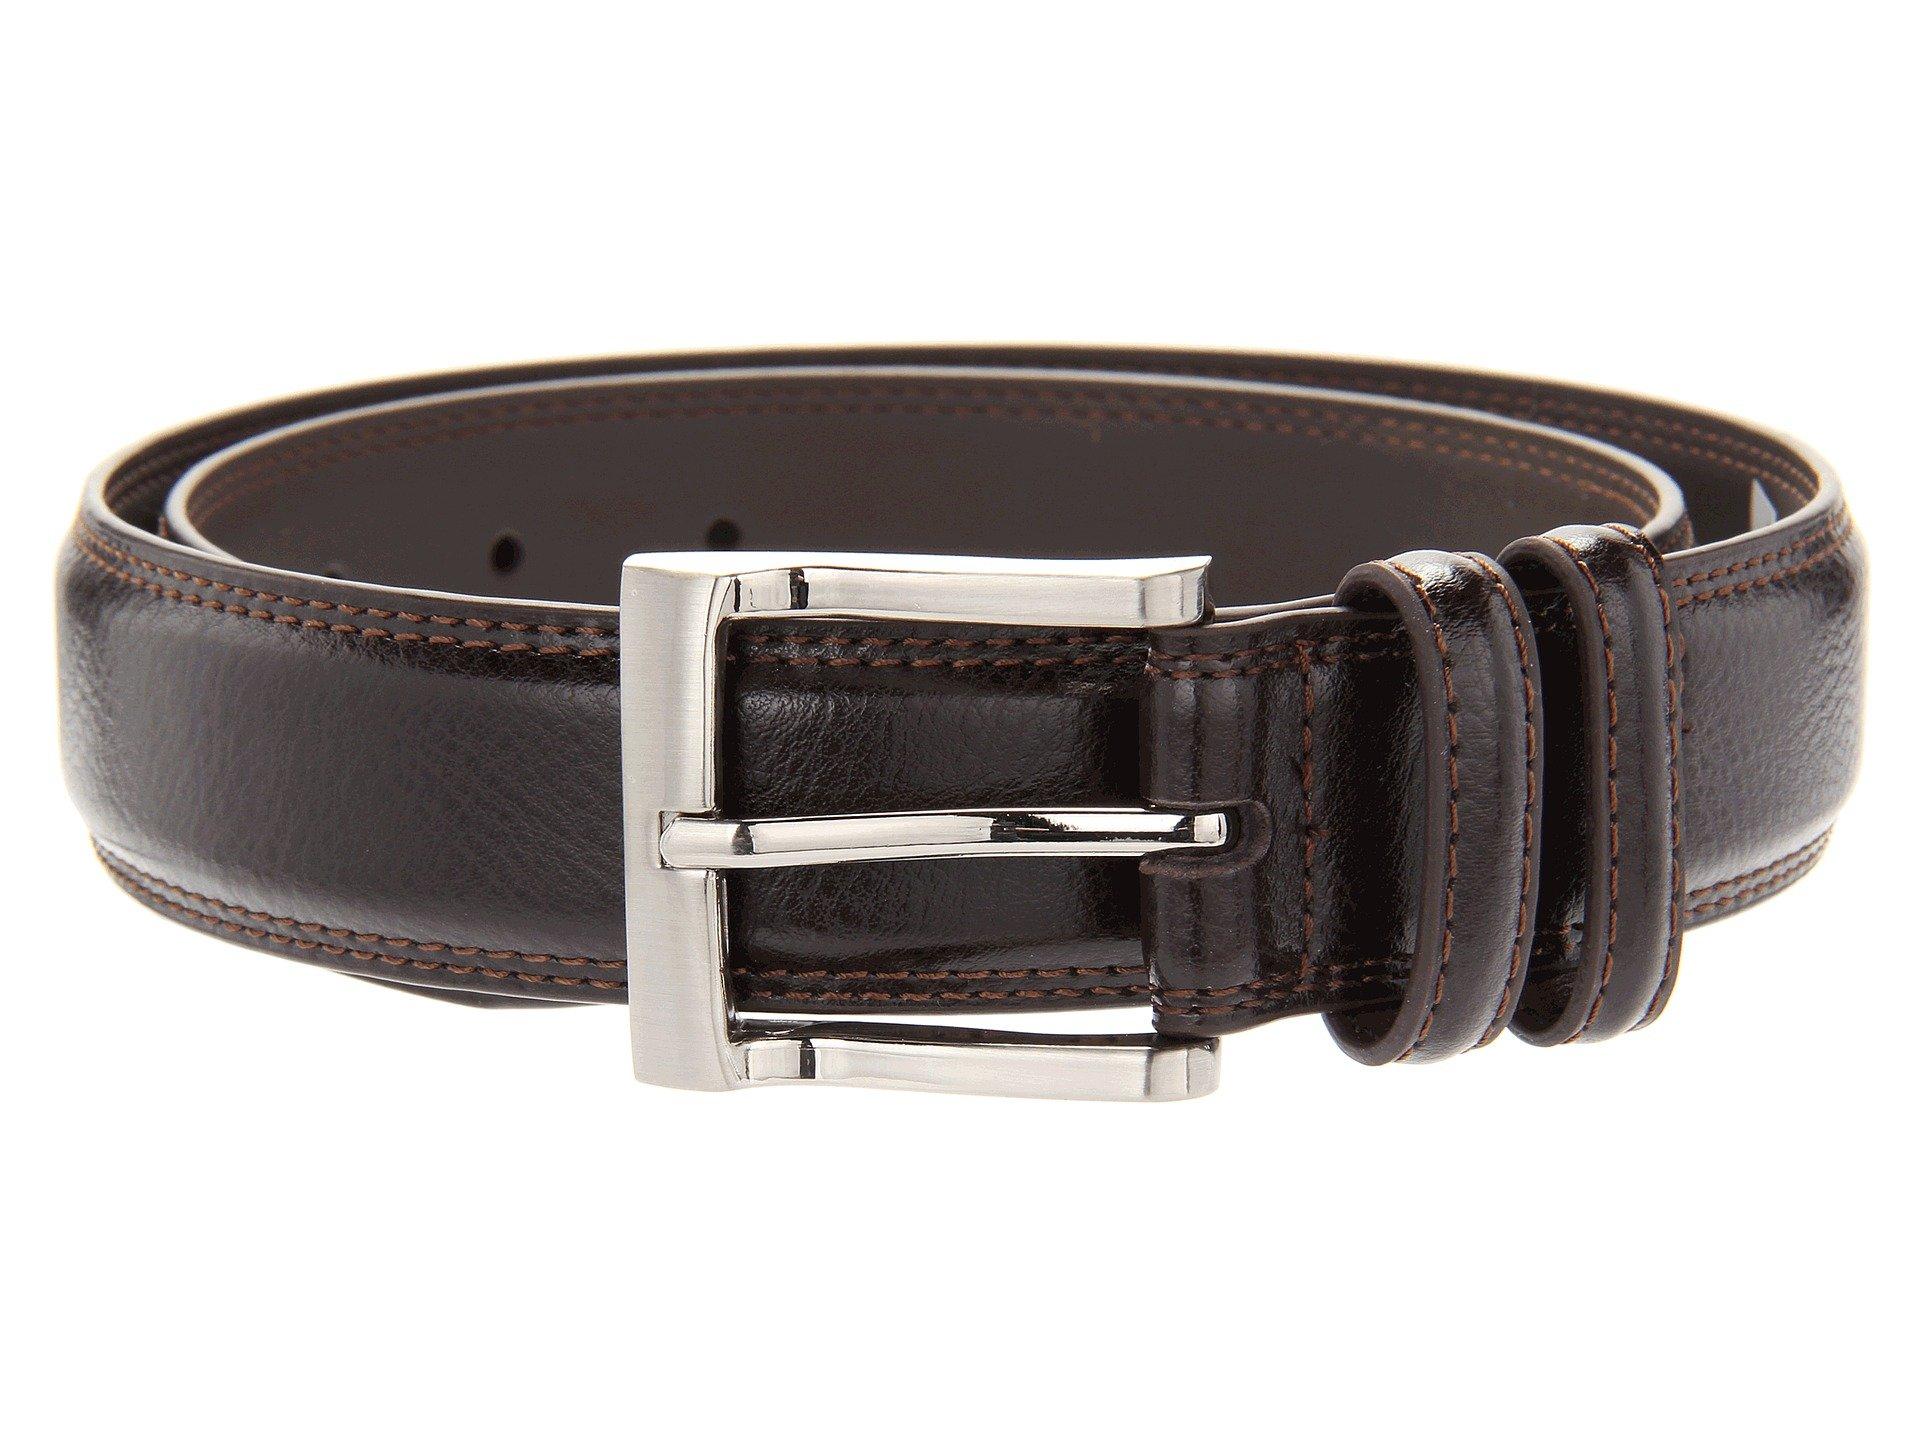 Florsheim Pebble Grain 32mm Leather Belt in Brown for Men - Lyst